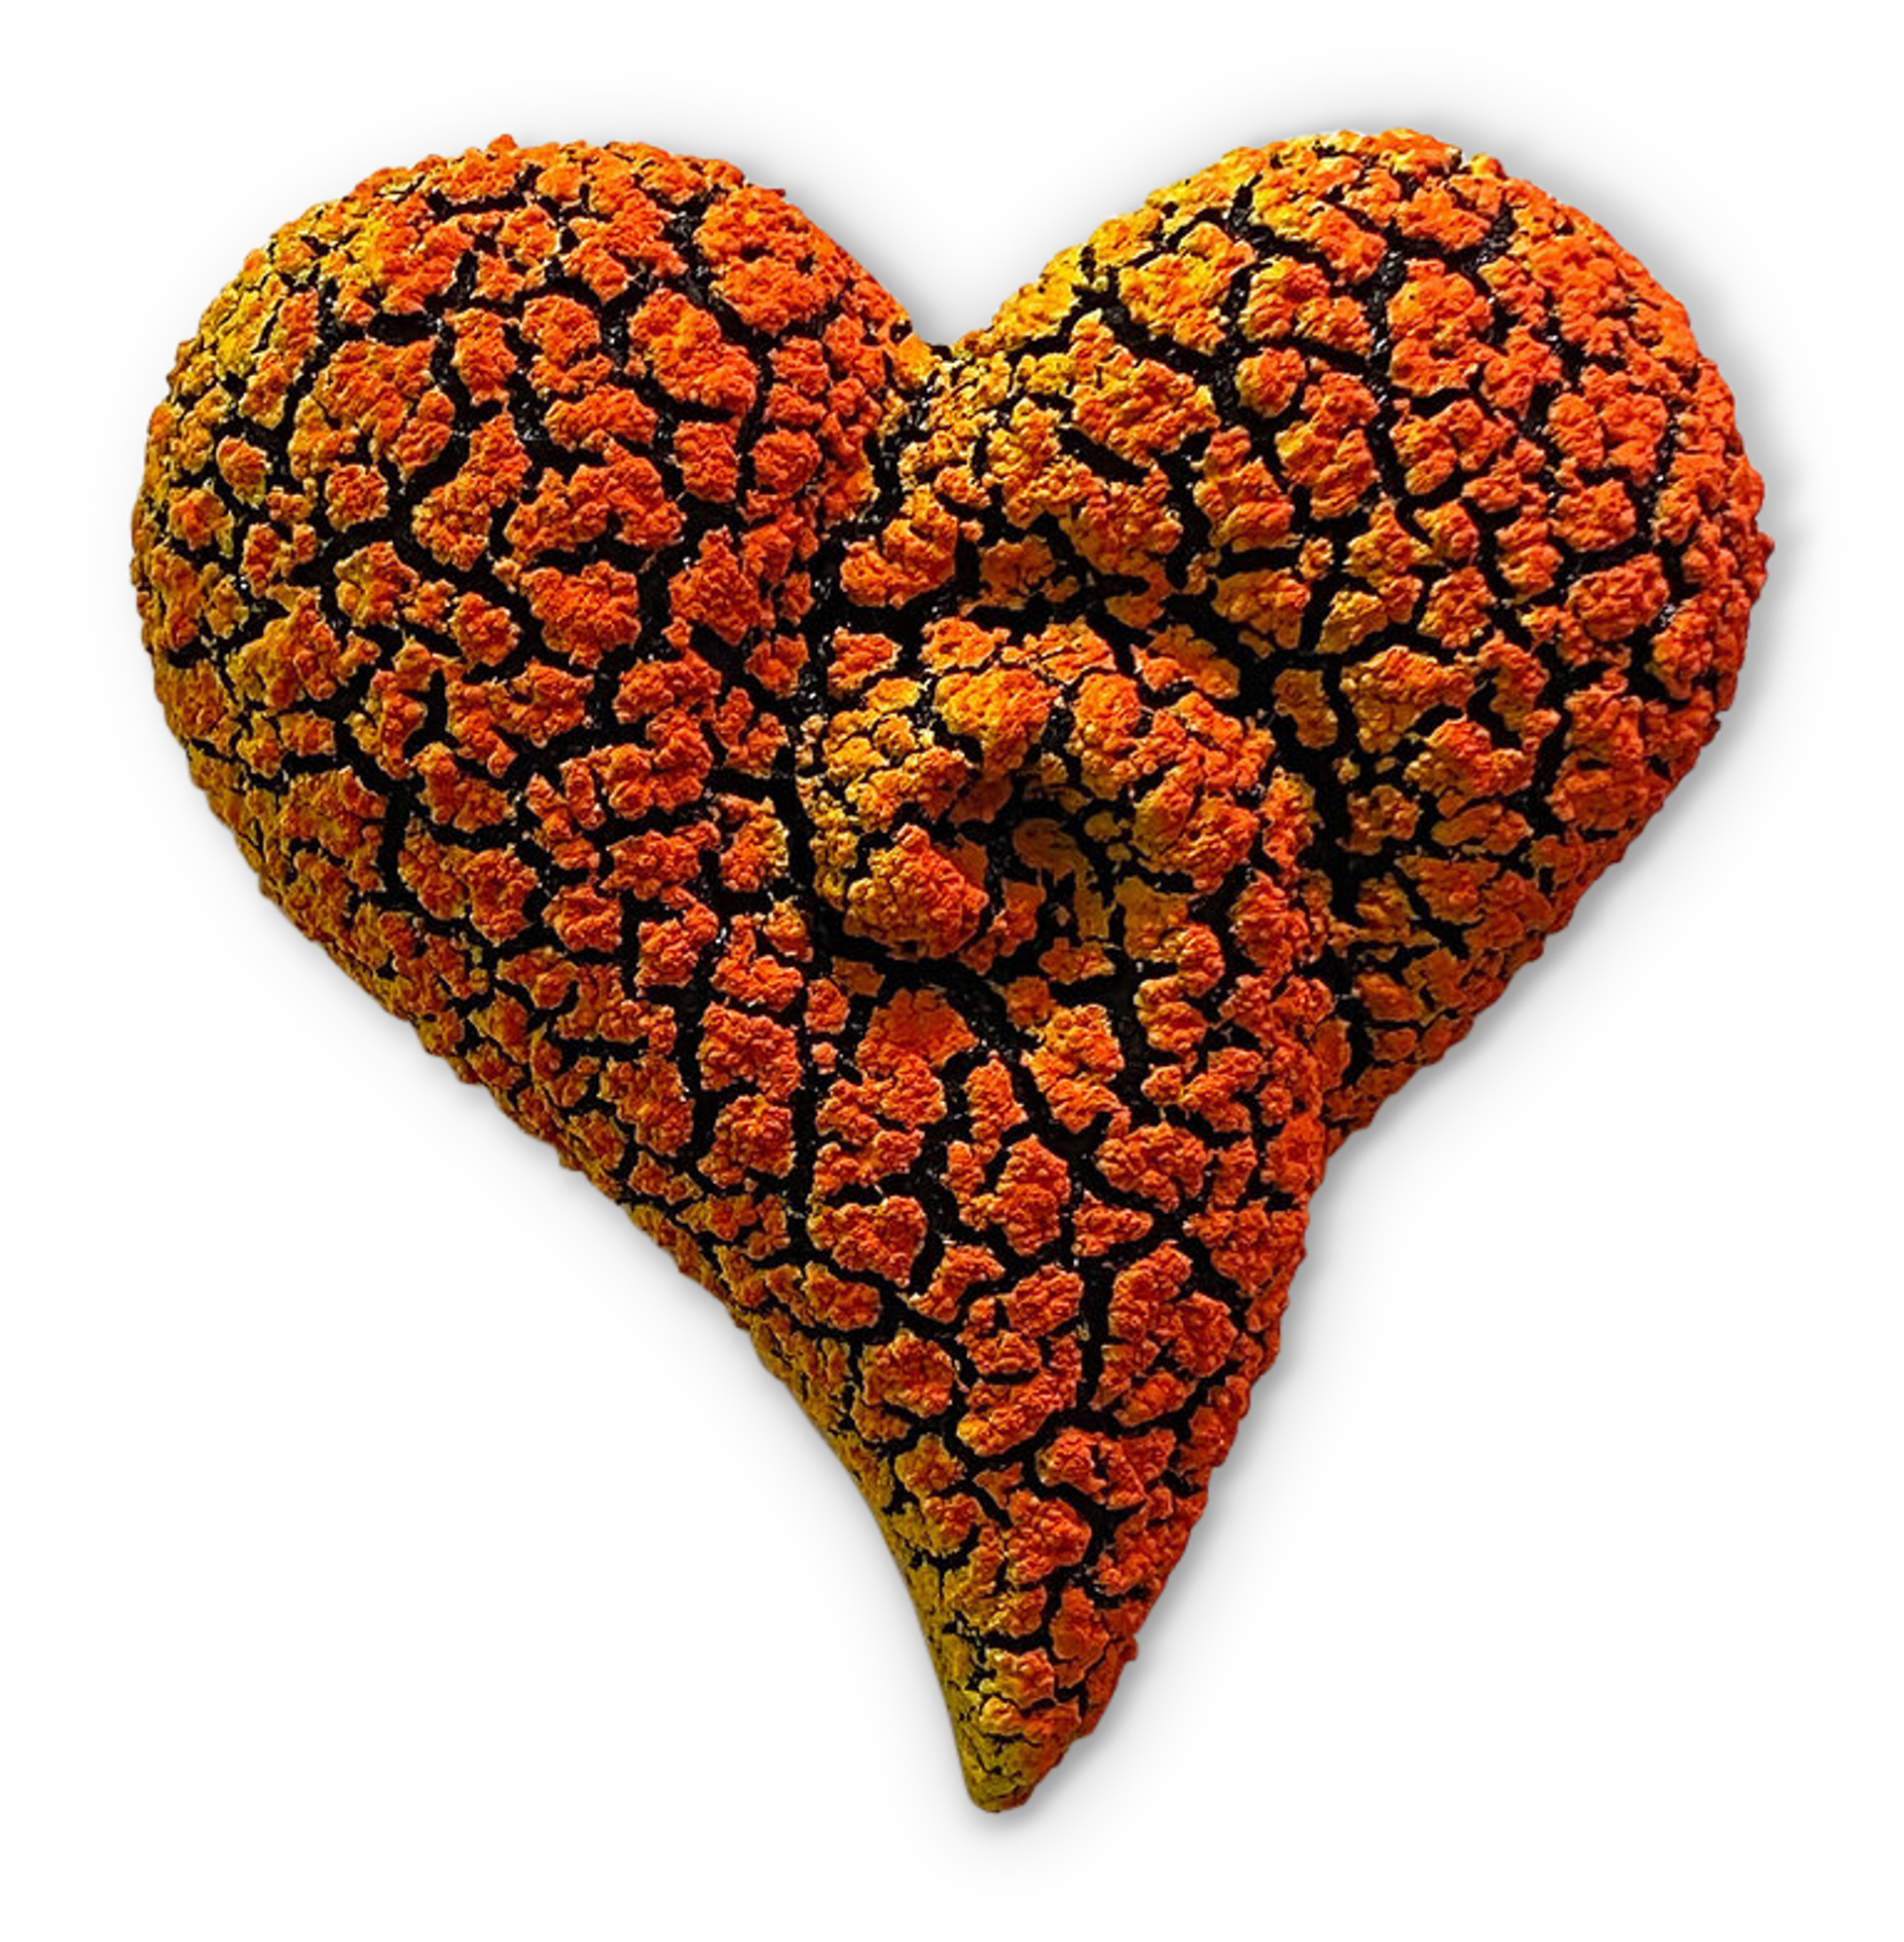 Yellow/Orange Swirled Lichen Heart by Randy O'Brien